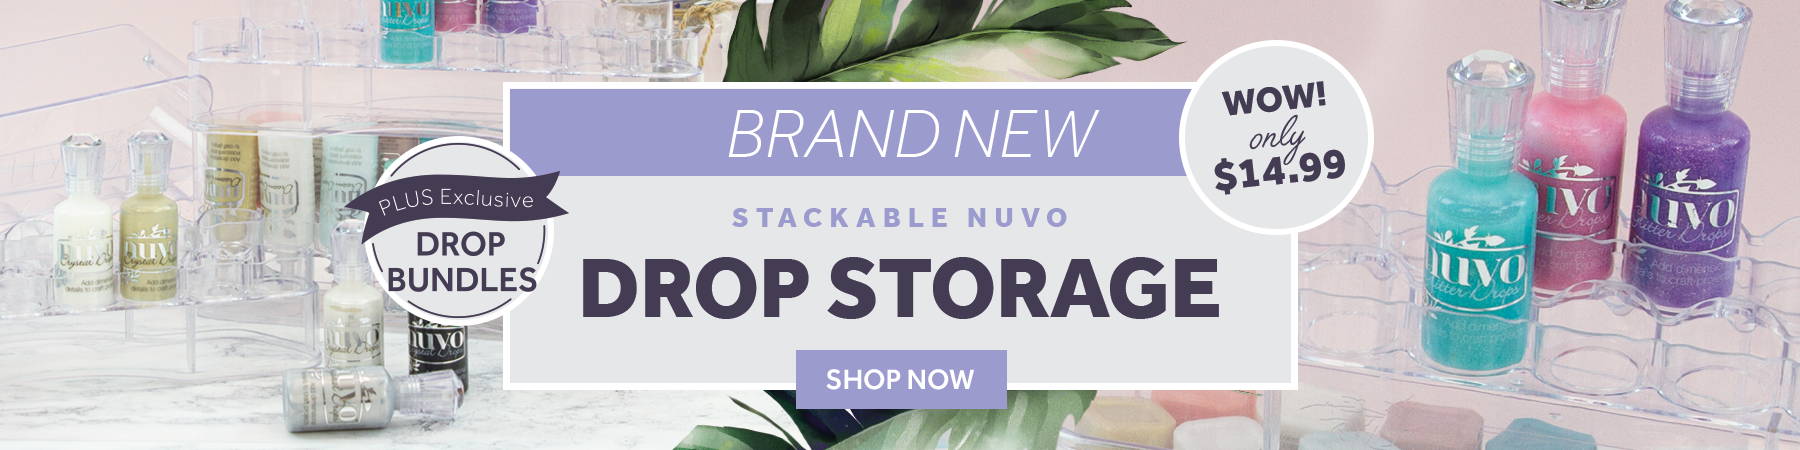 Nuvo Drops Stackable Storage